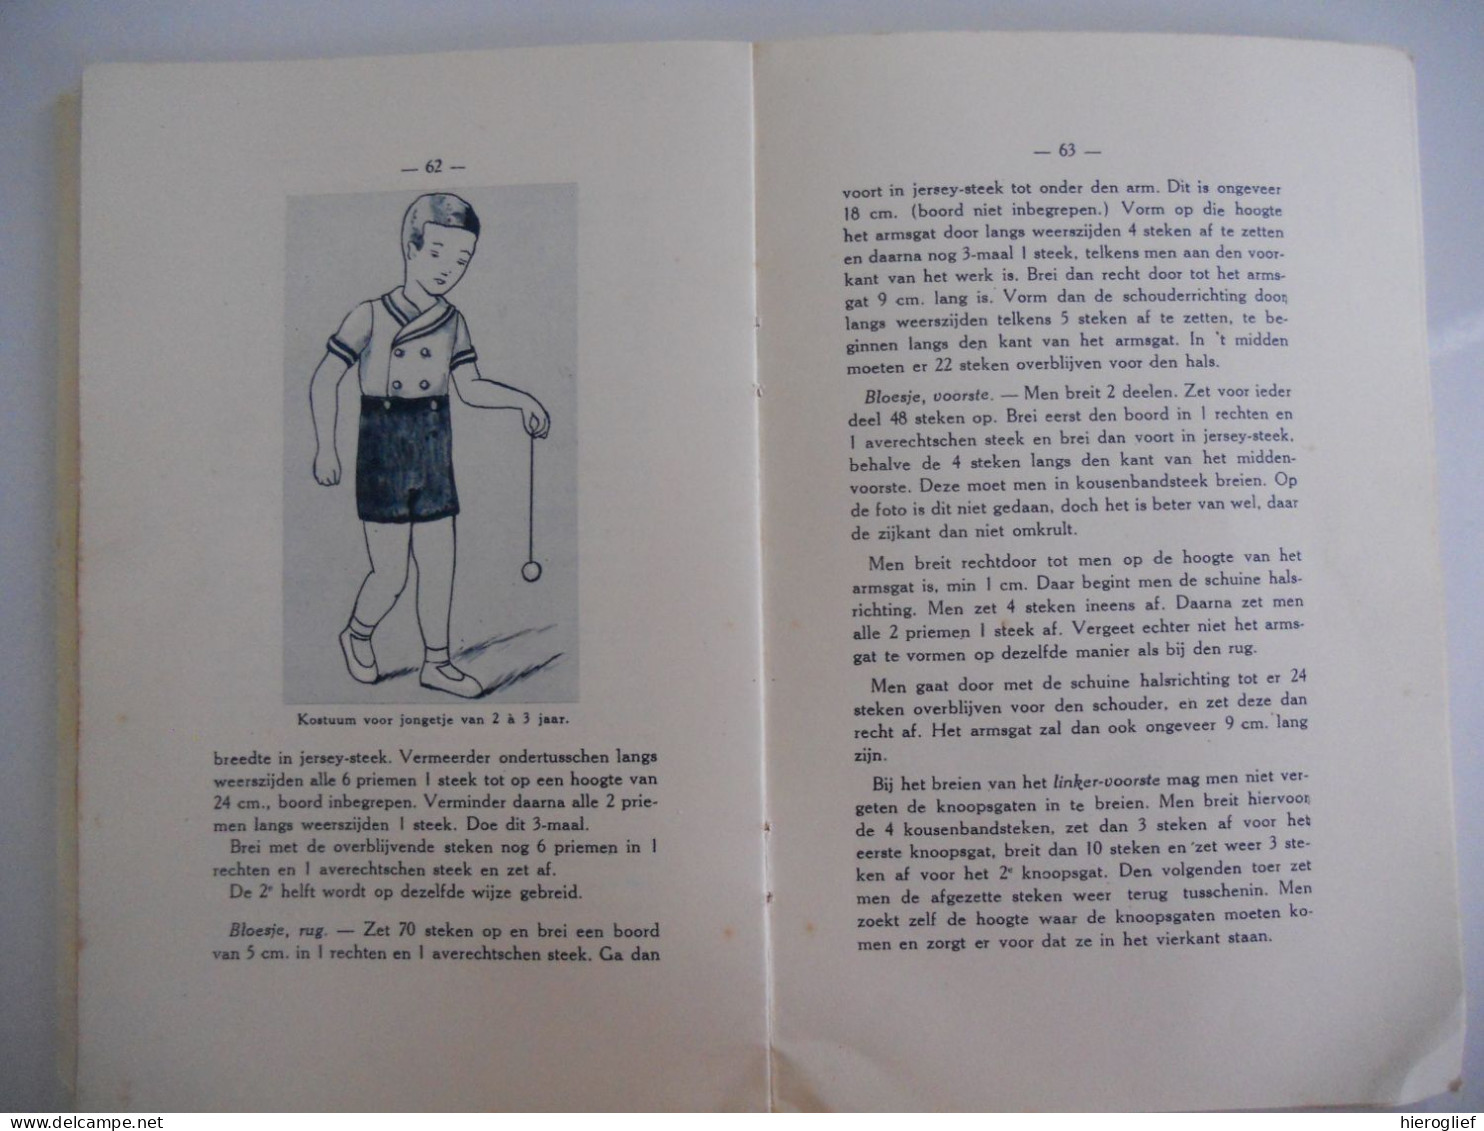 Ons Breiwerkboekje 1935 Belgischen Boerenbond / breiwerk breien handwerk siersteken haken boerinnenbond KVLV Ferm